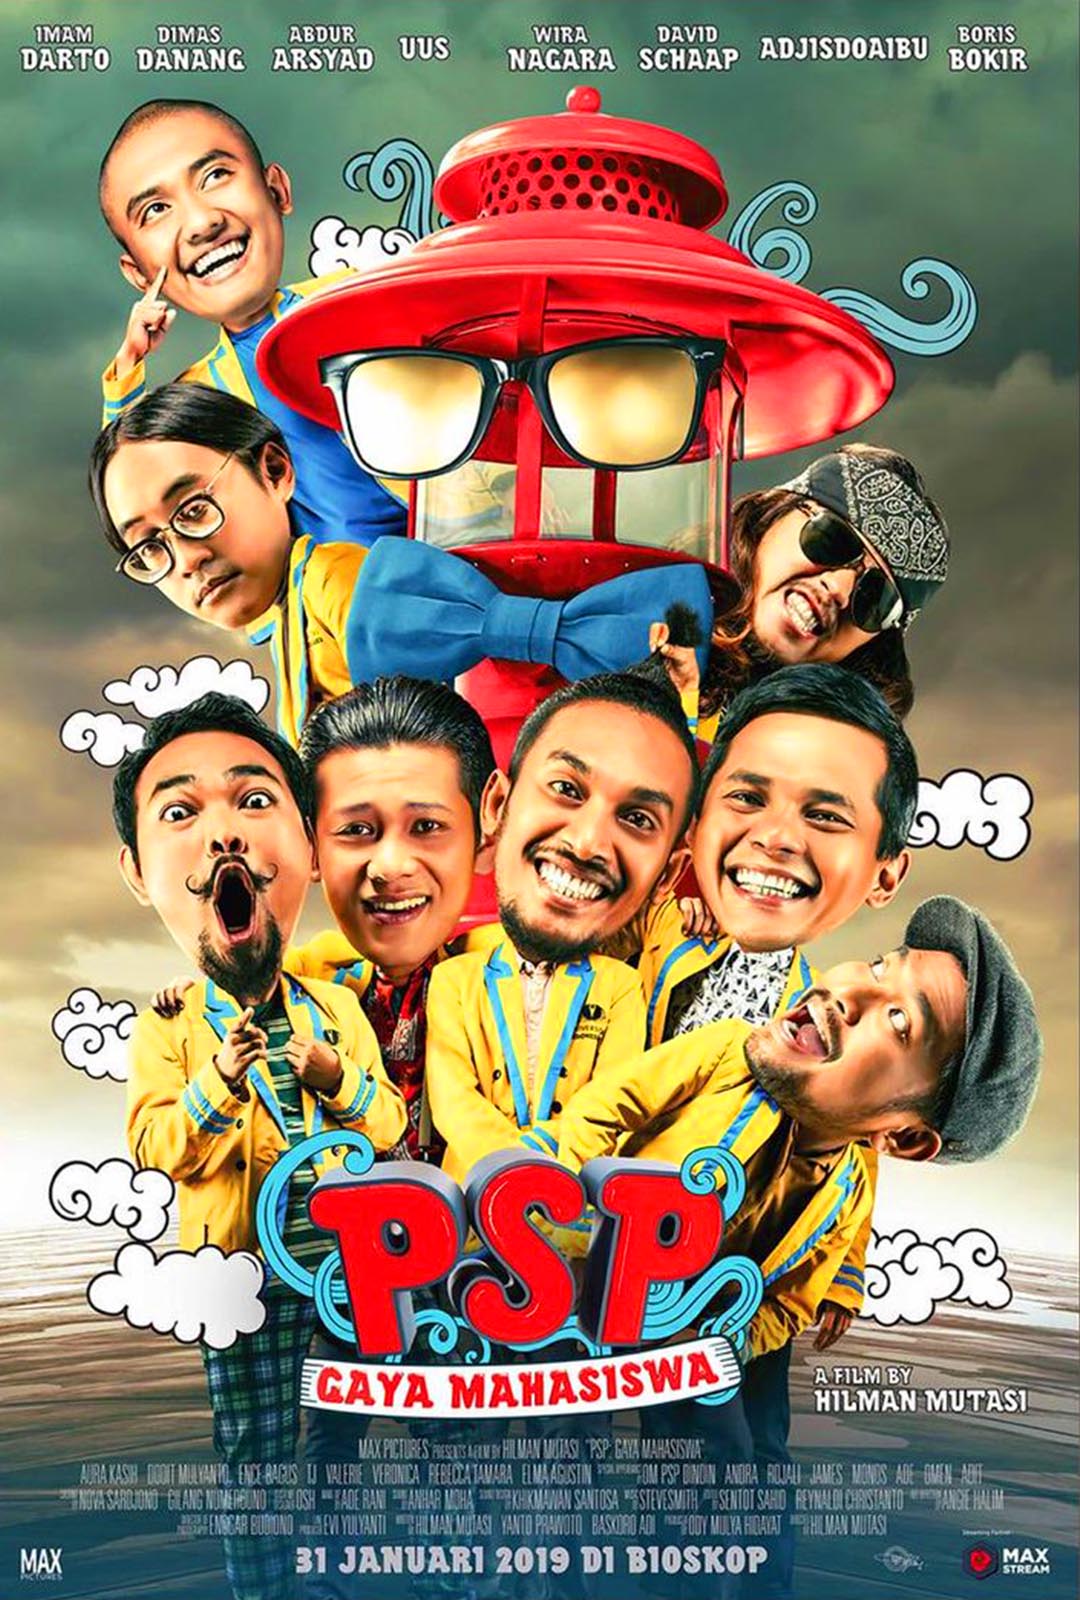 PSP: Gaya Mahasiswa (2019)